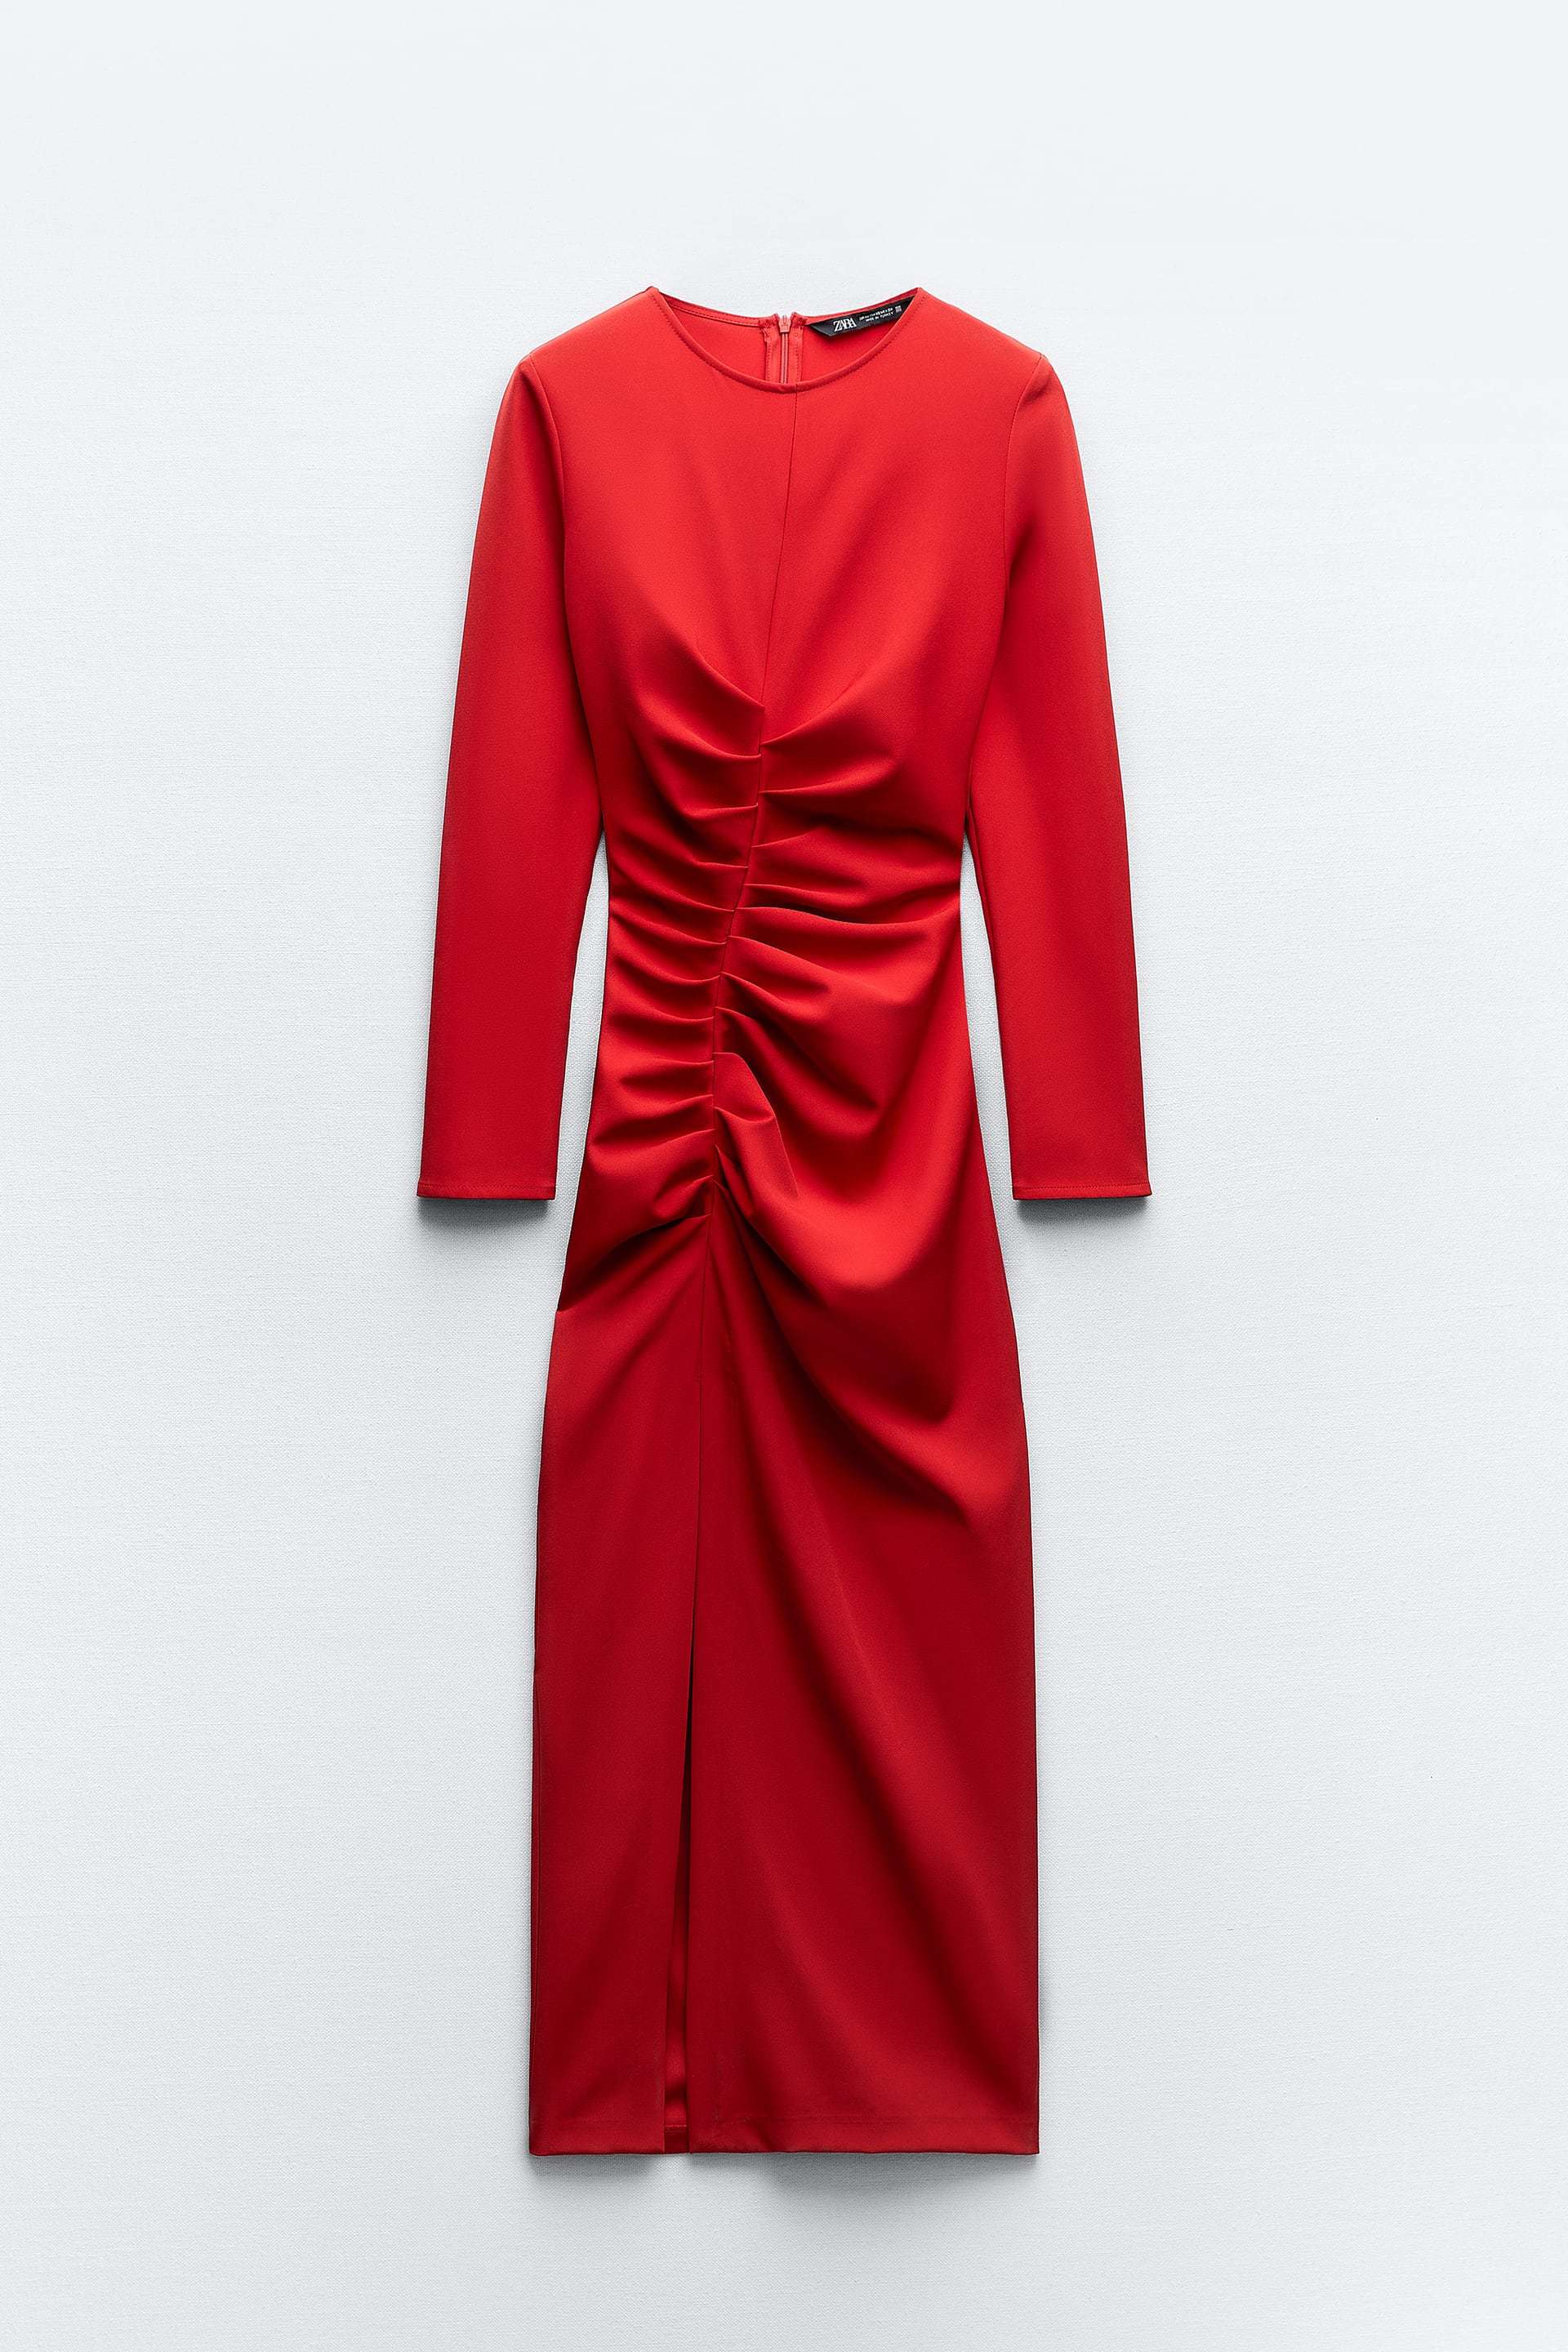 Vestido rojo con drapeado de Zara (29,95 euros).